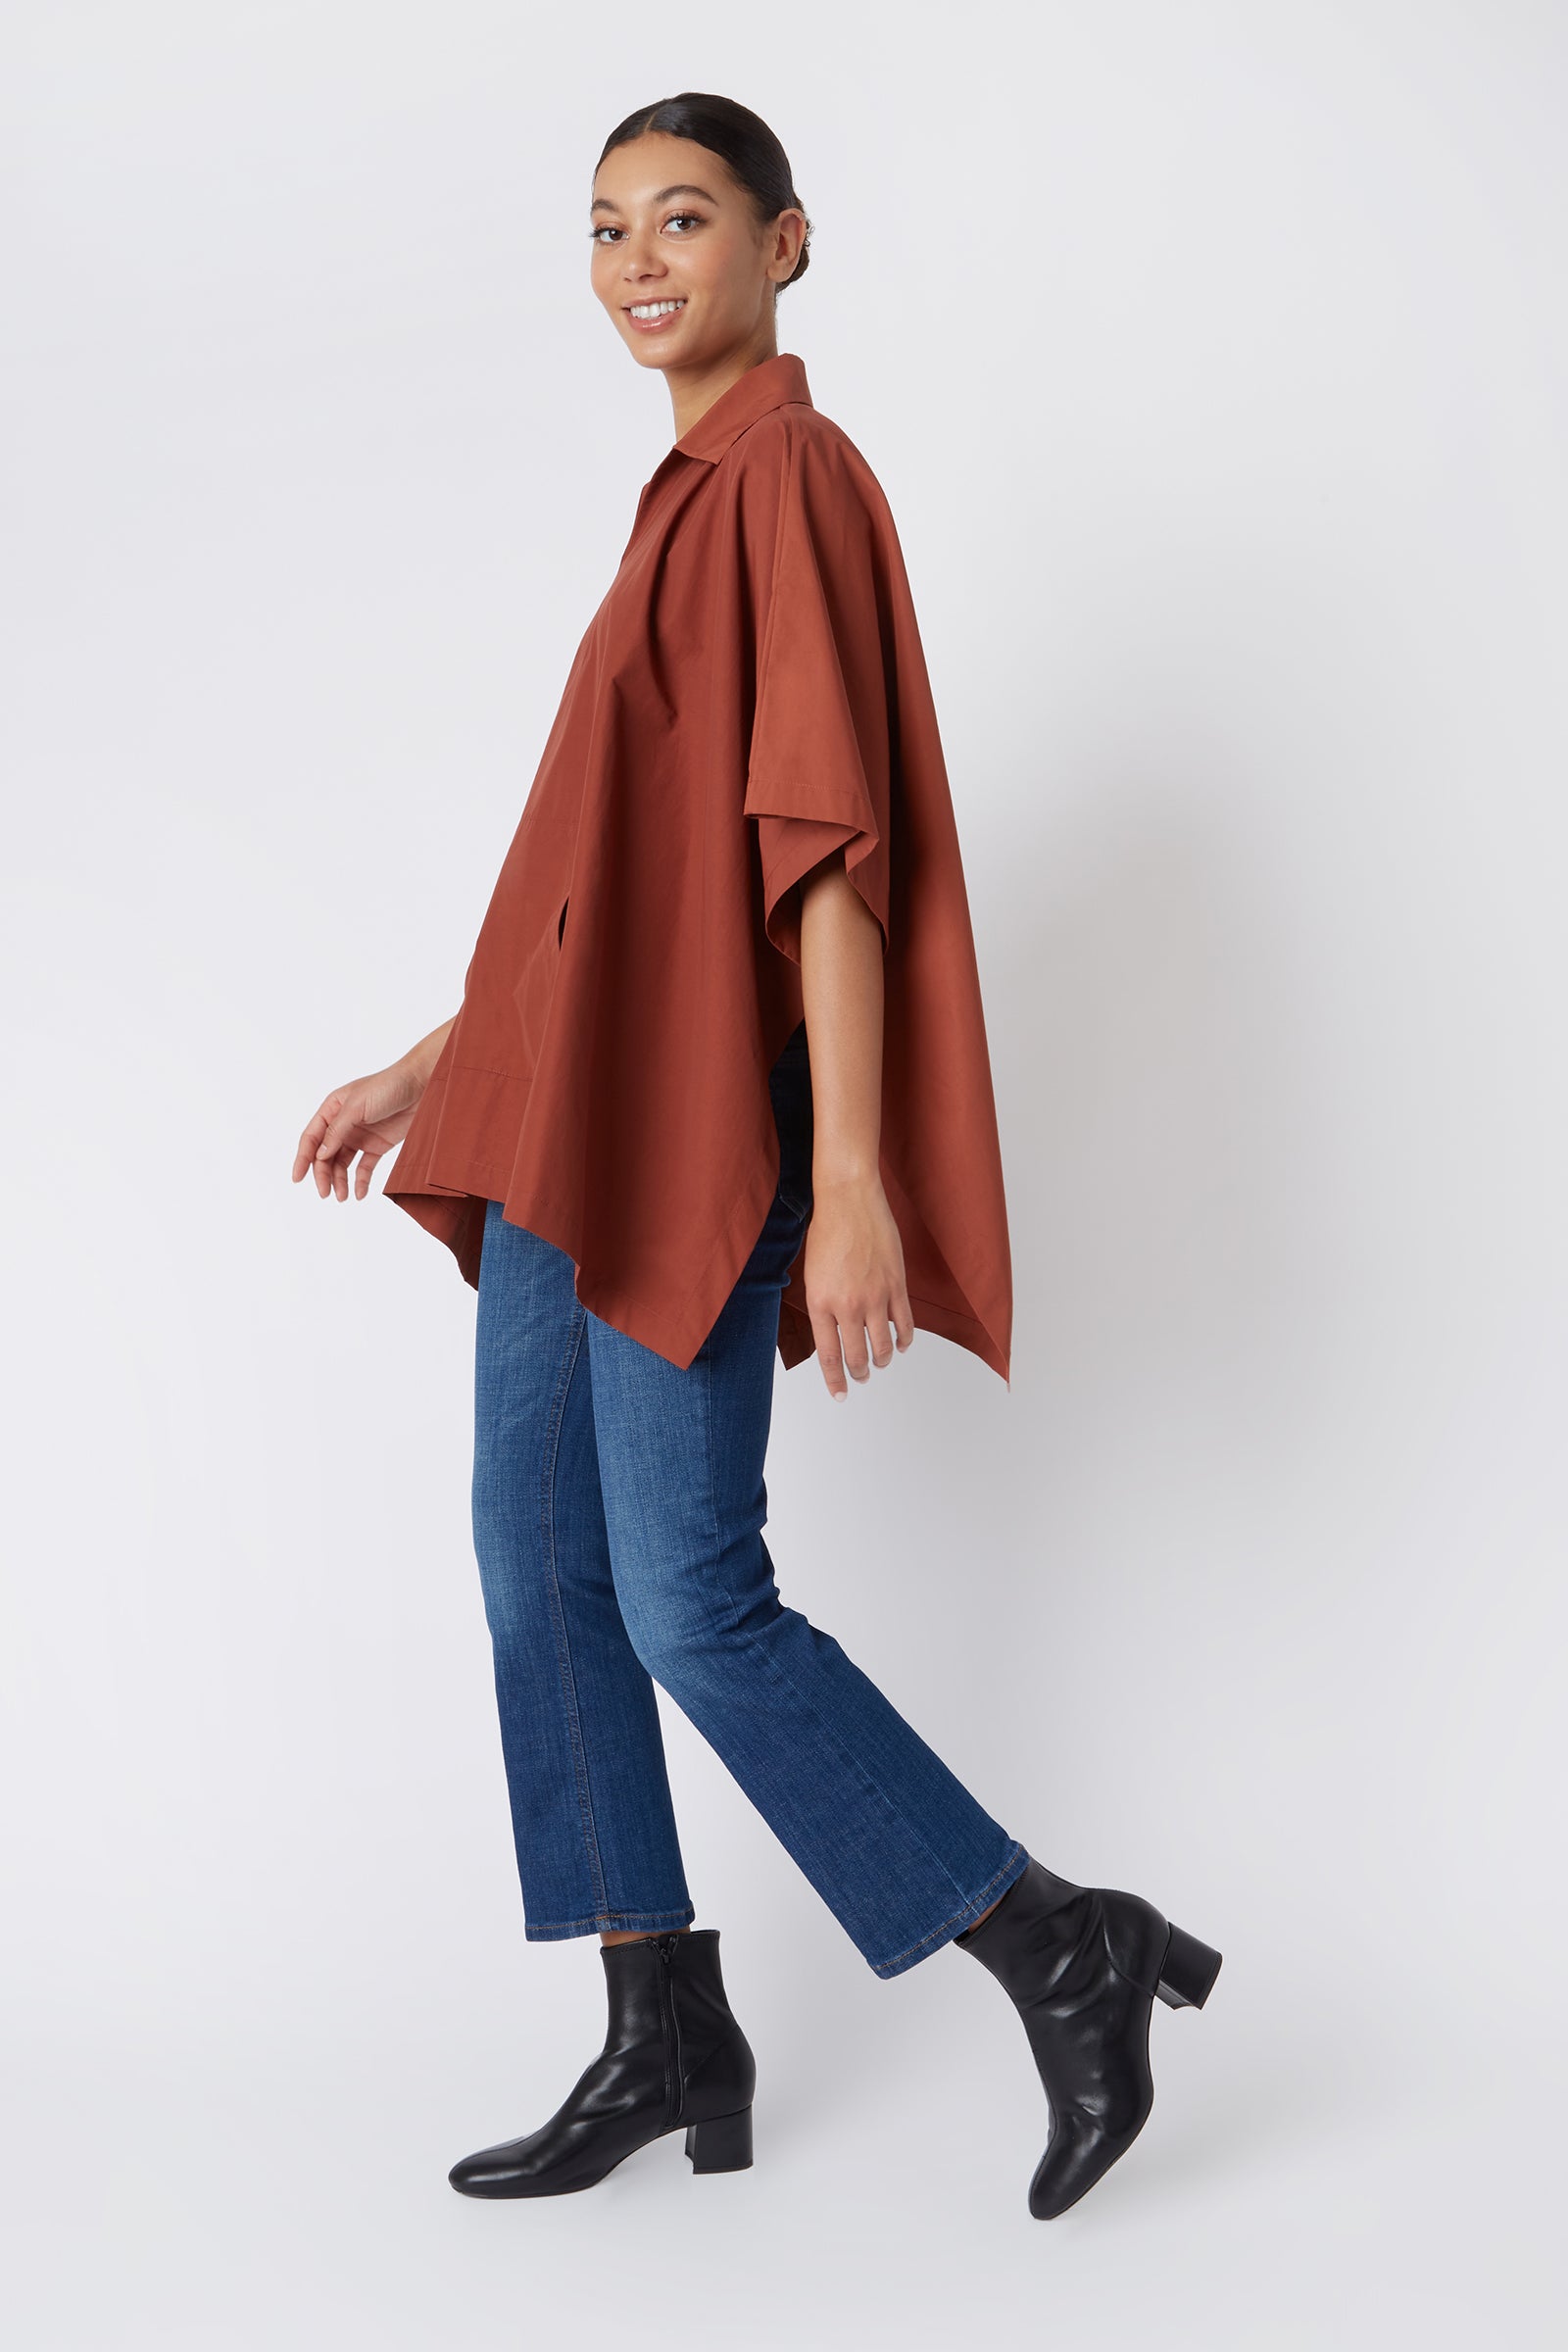 Kal Rieman Pocket Poncho in Rust Italian Broadcloth on Model Walking Full Side View